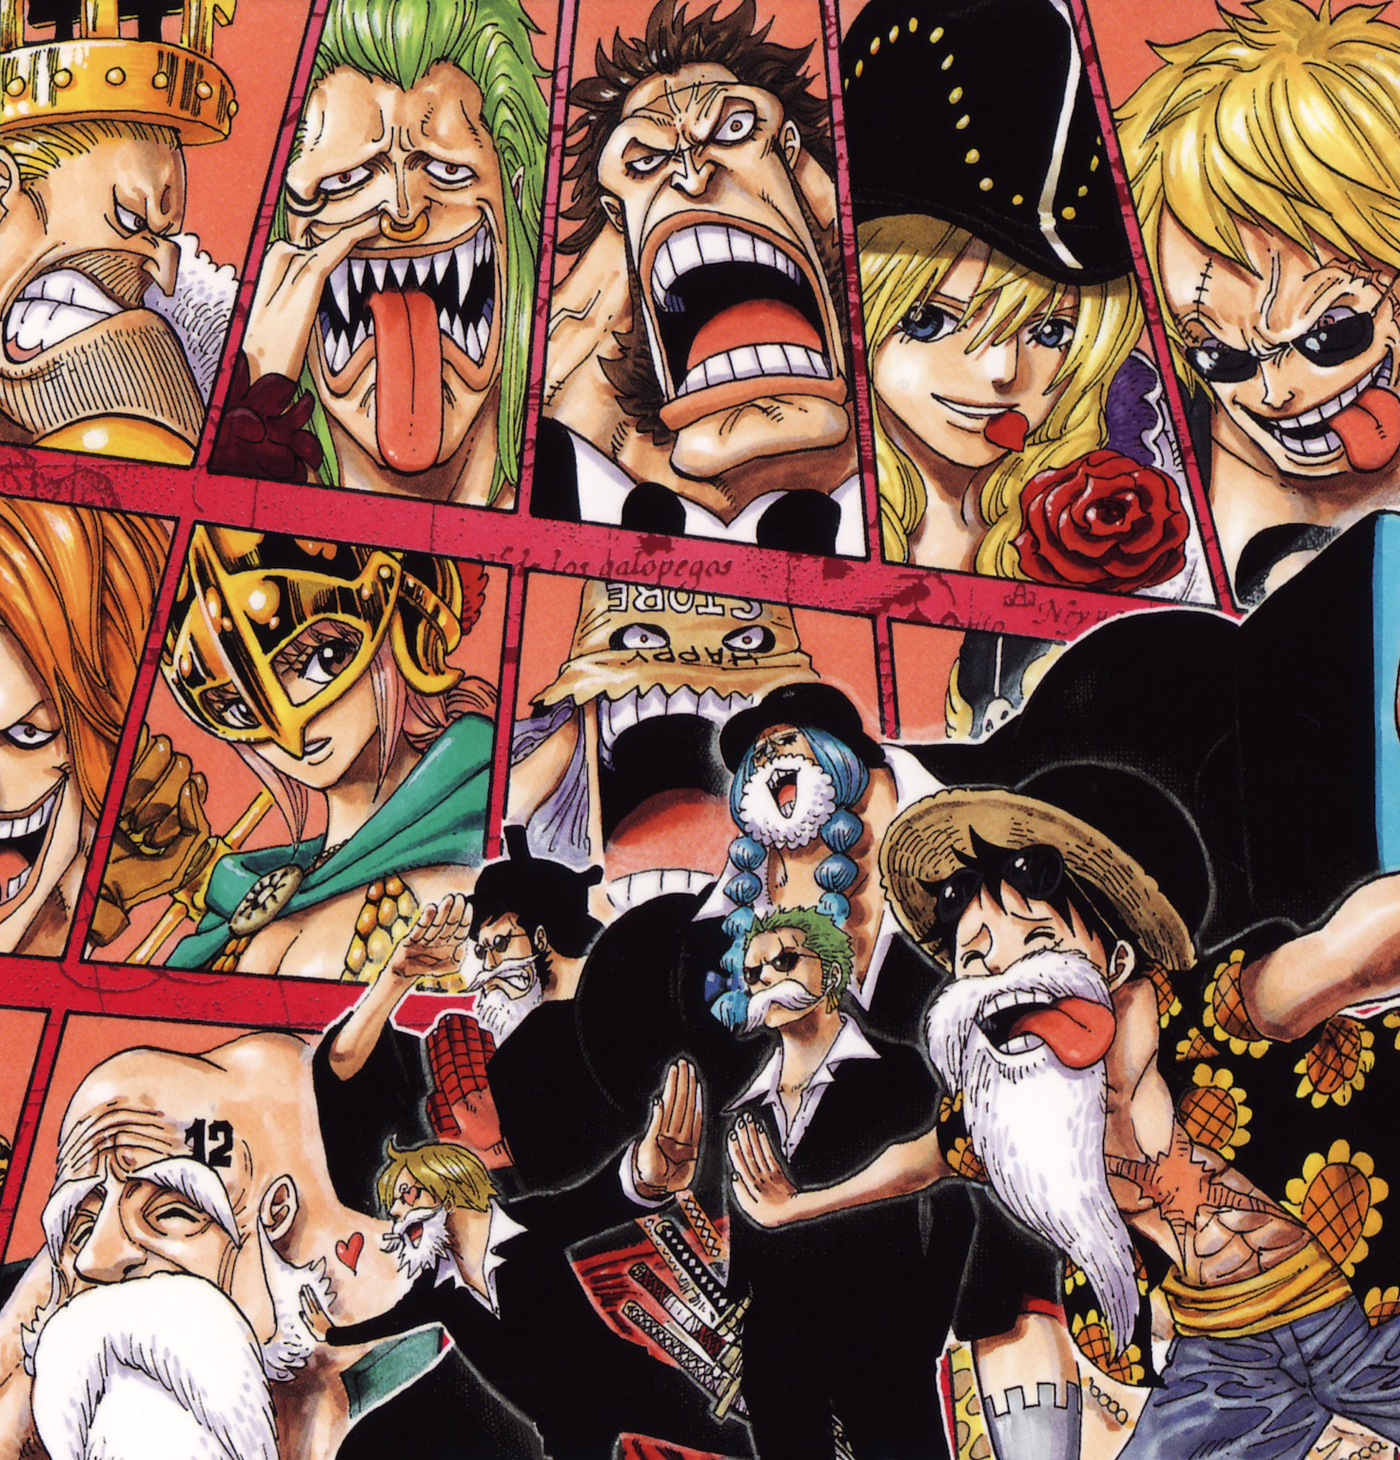 Download 60 Wallpaper One Piece Dressrosa terbaru 2019